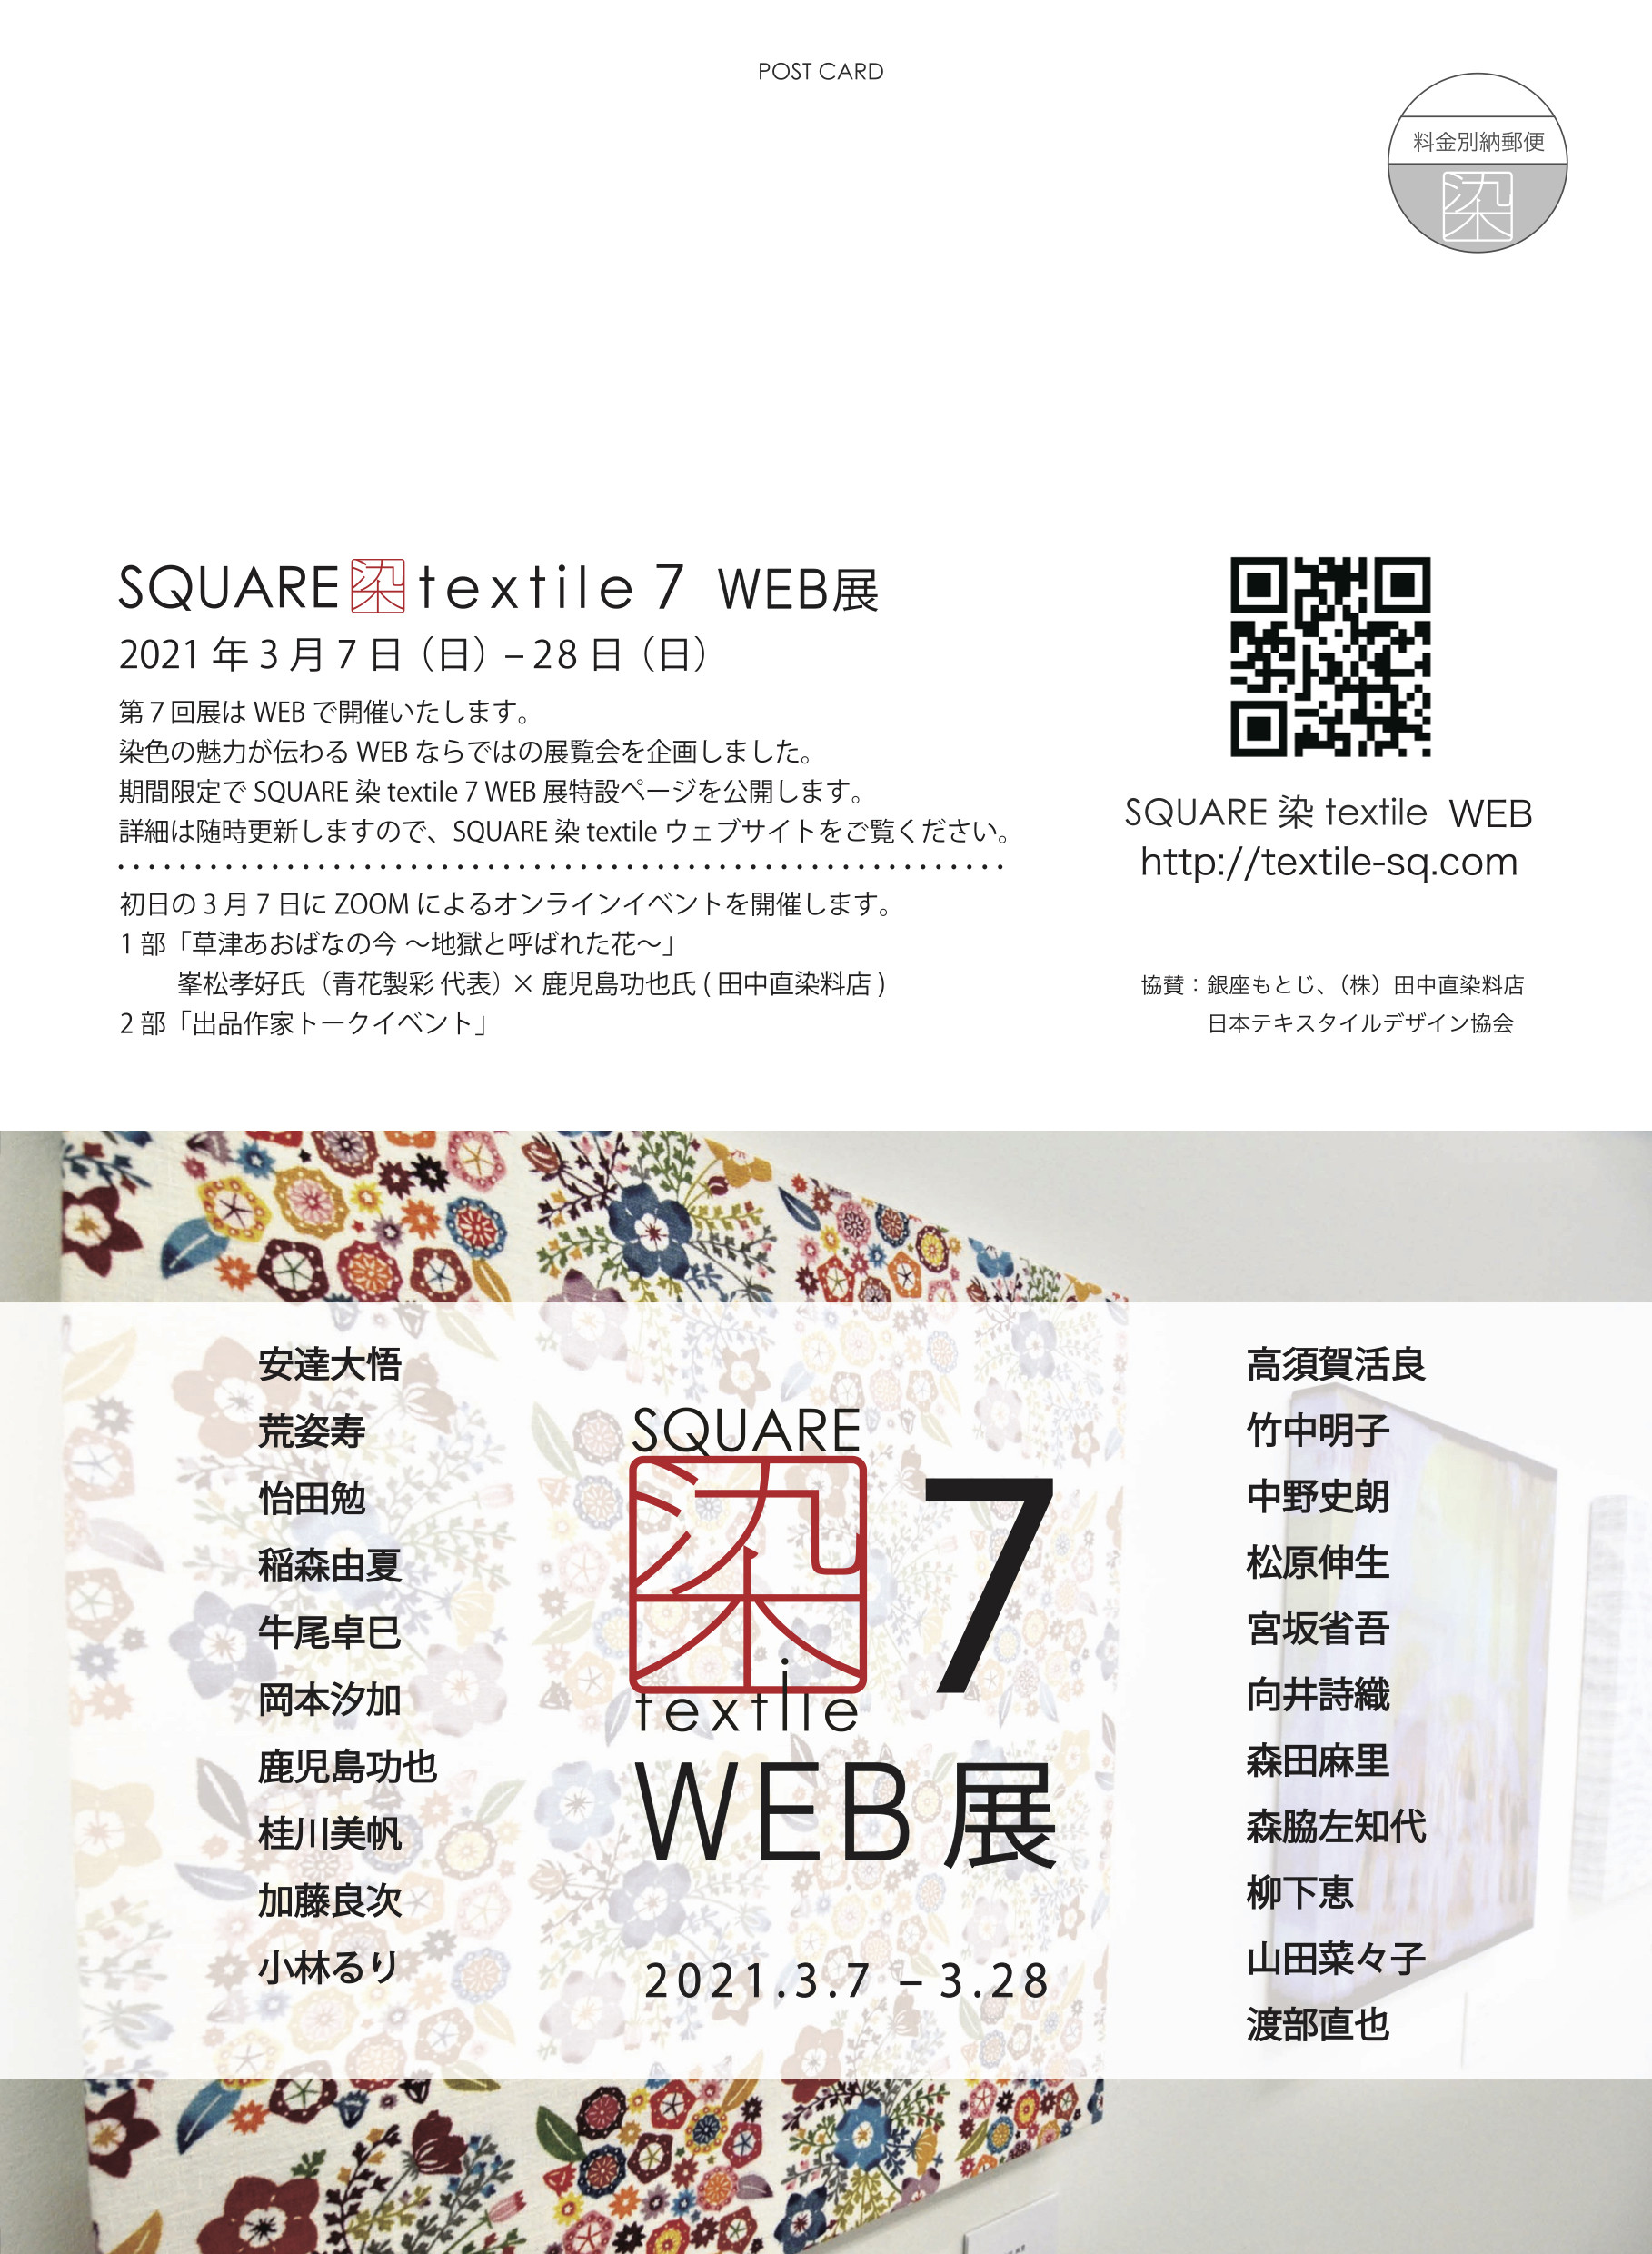 SQUARE 染 textile 7 WEB展 のお知らせ